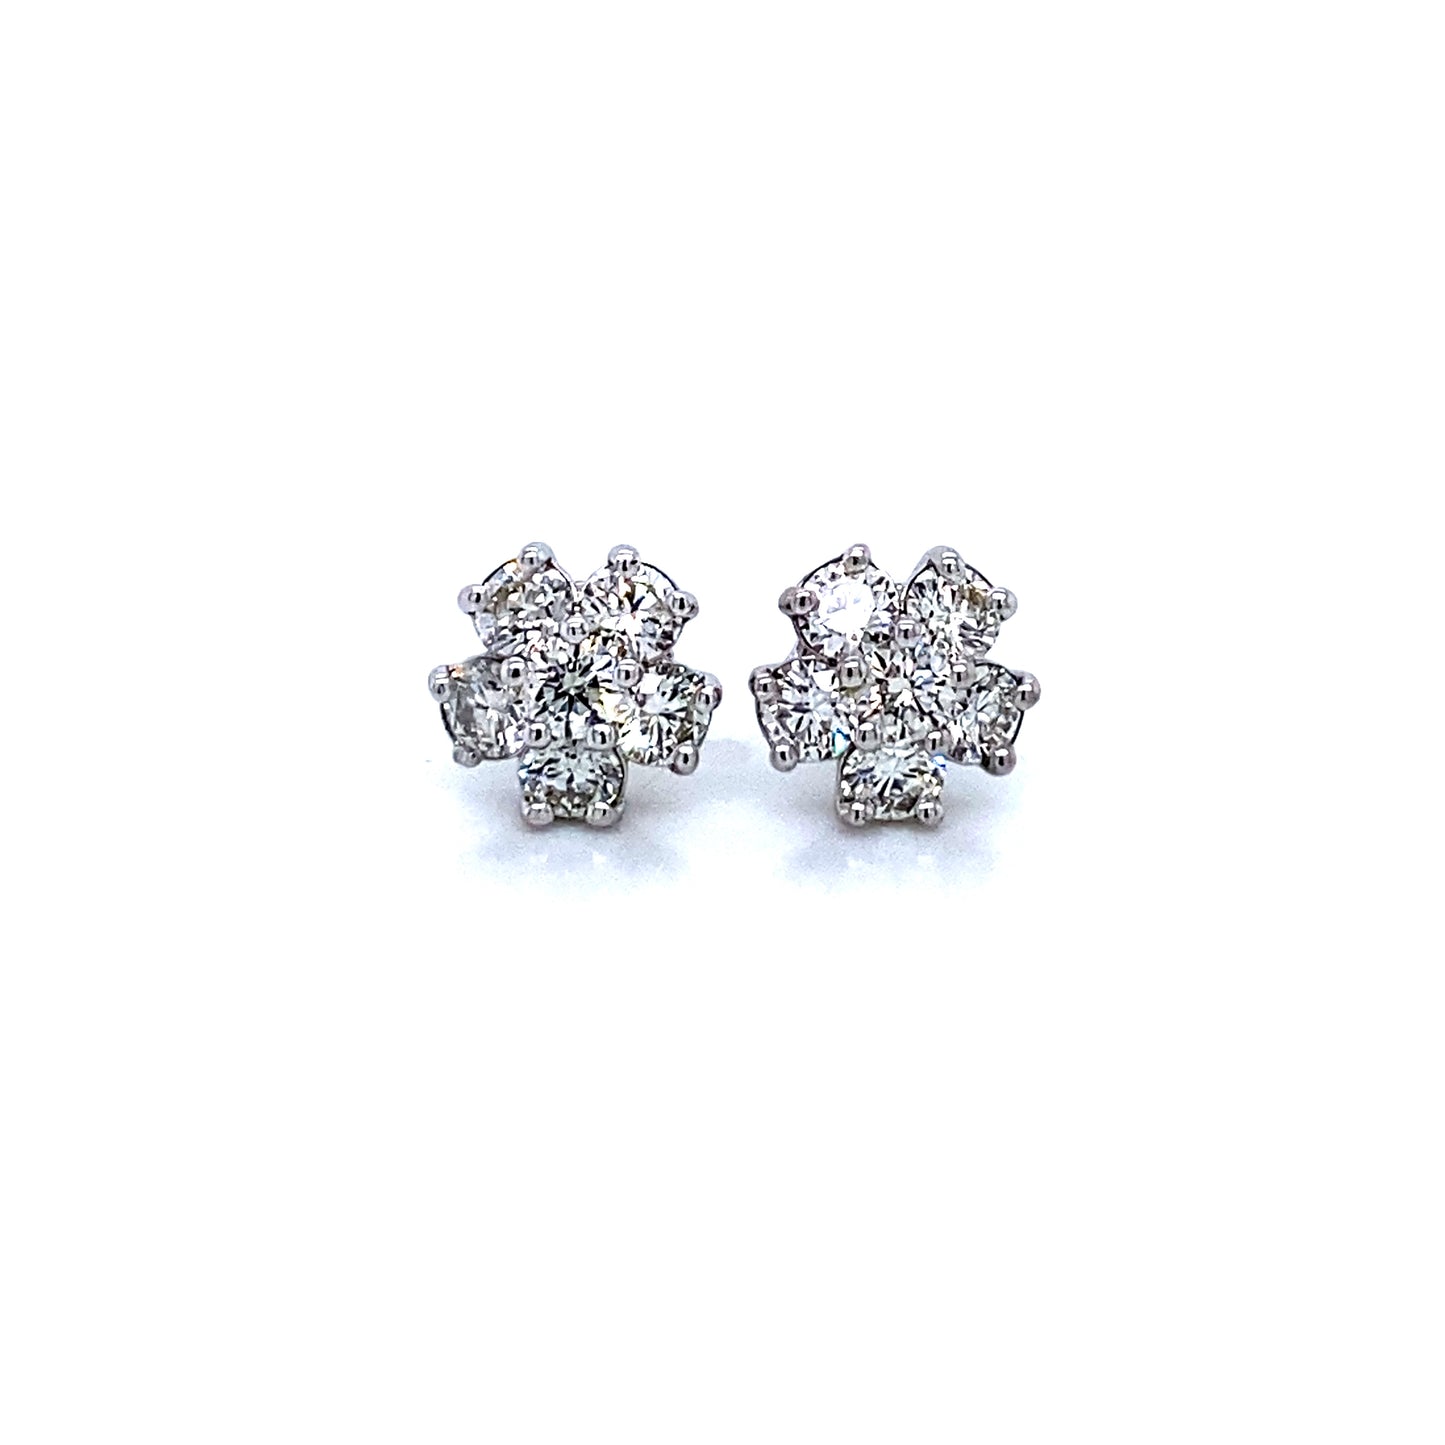 14K White Gold Cluster Stud Earring, Snowflake, 0.70 cttw